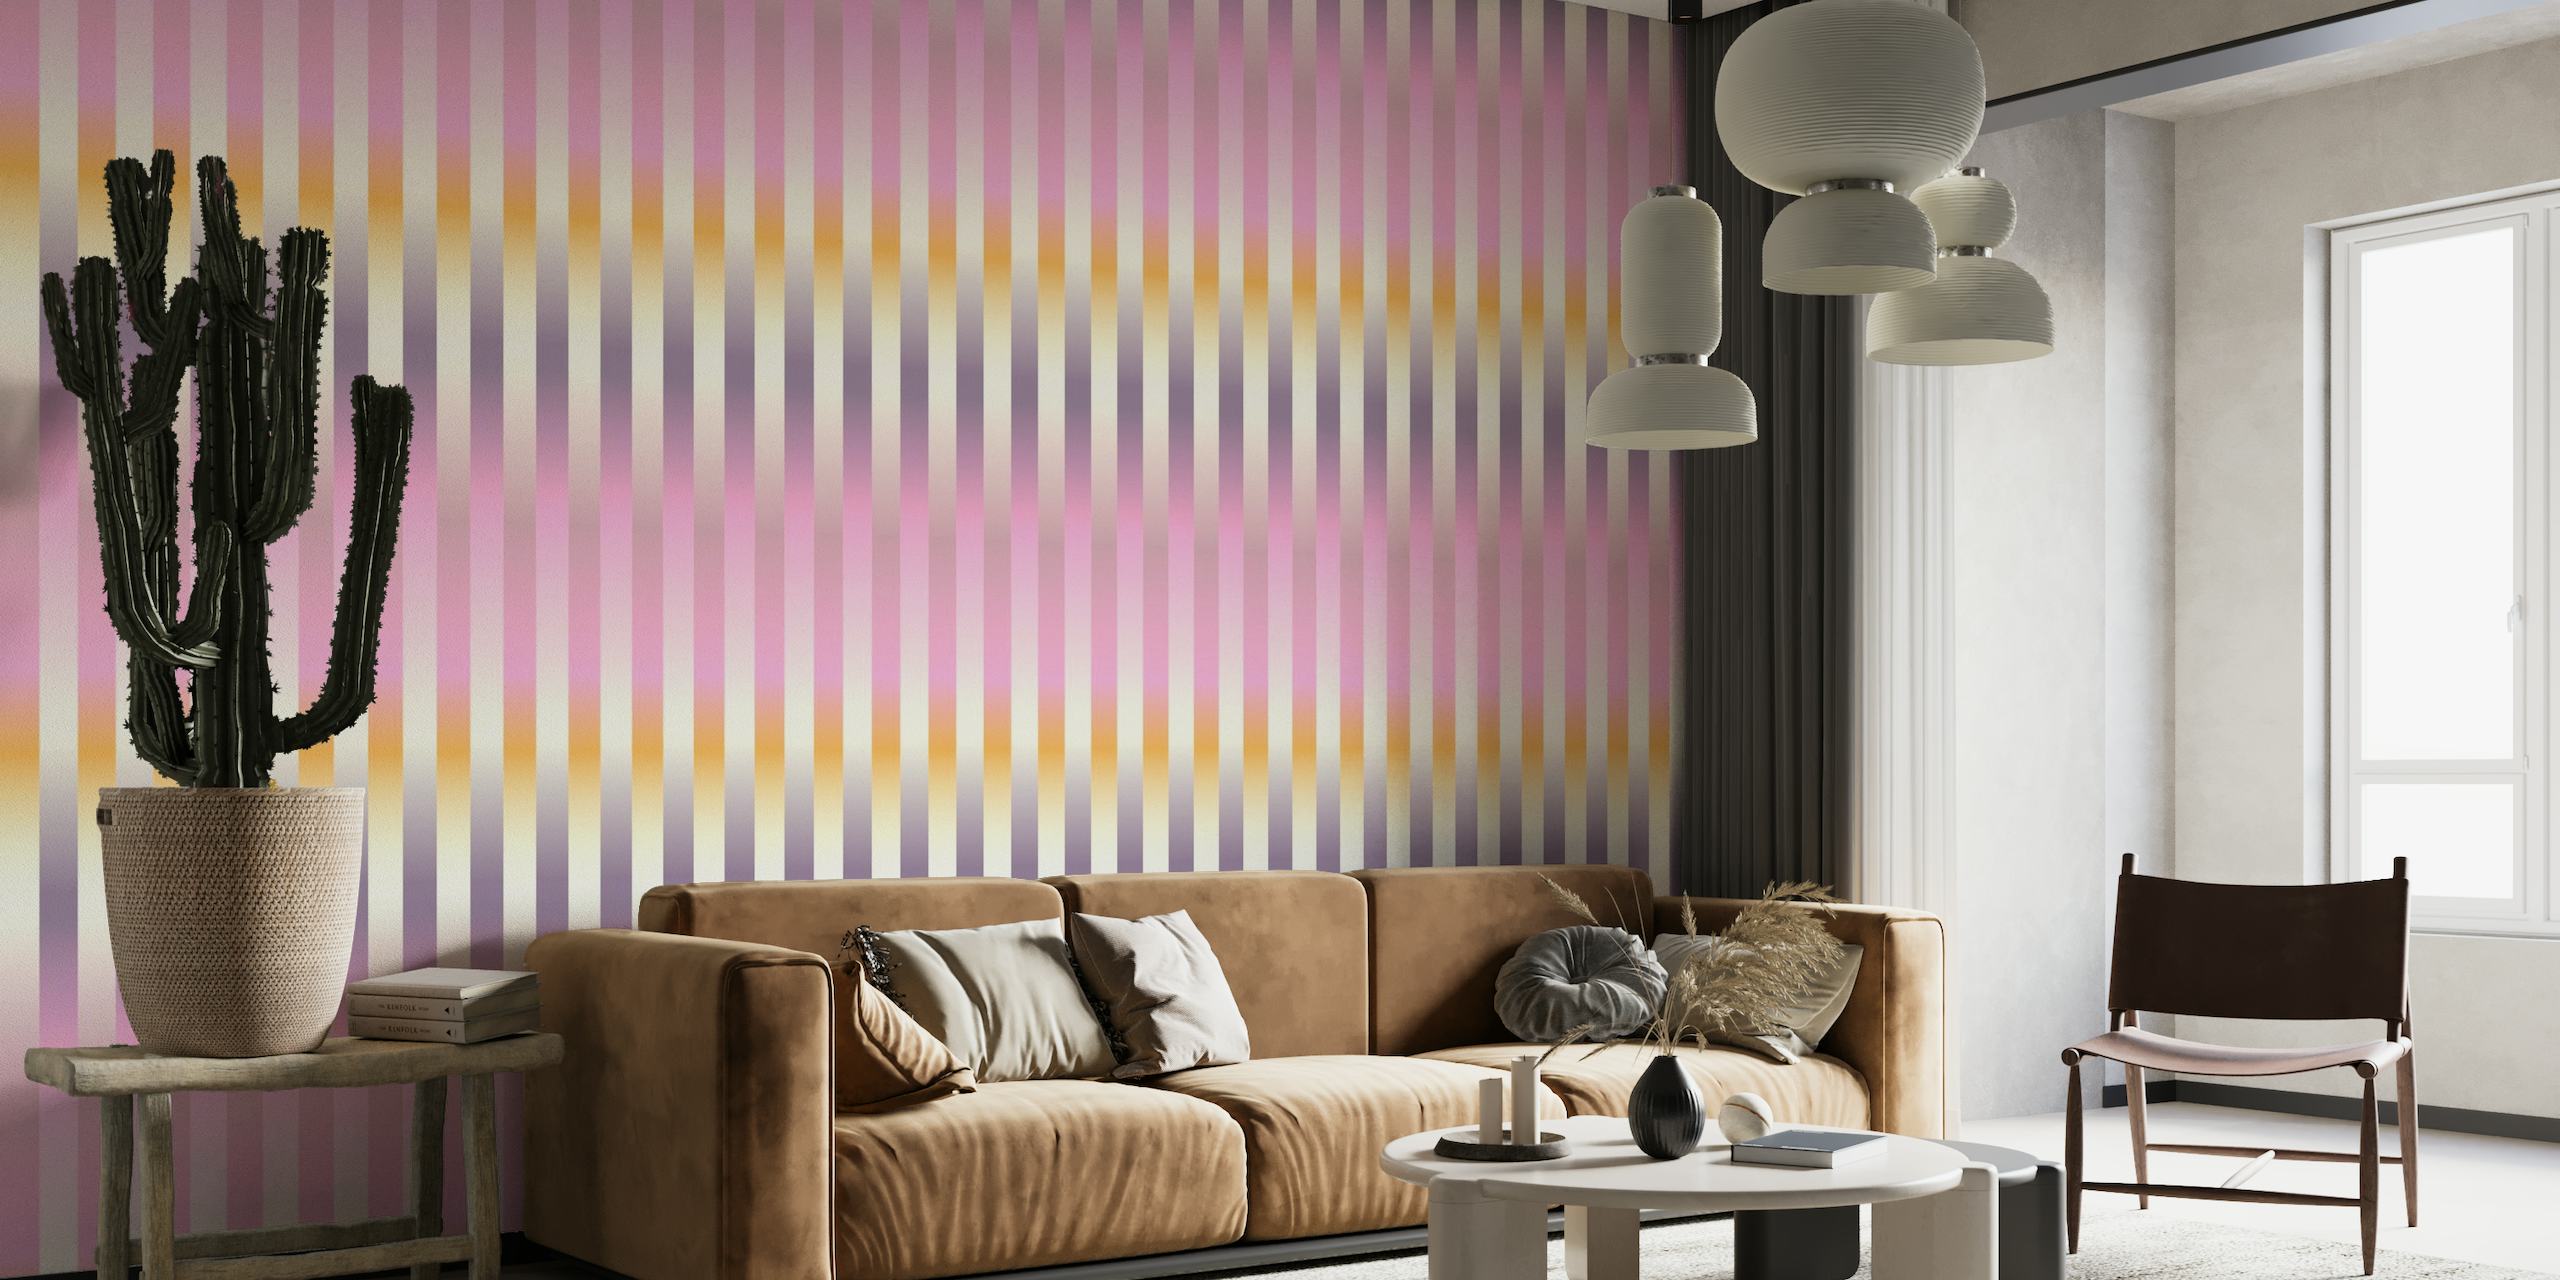 Blurred Stripes lilac papel pintado